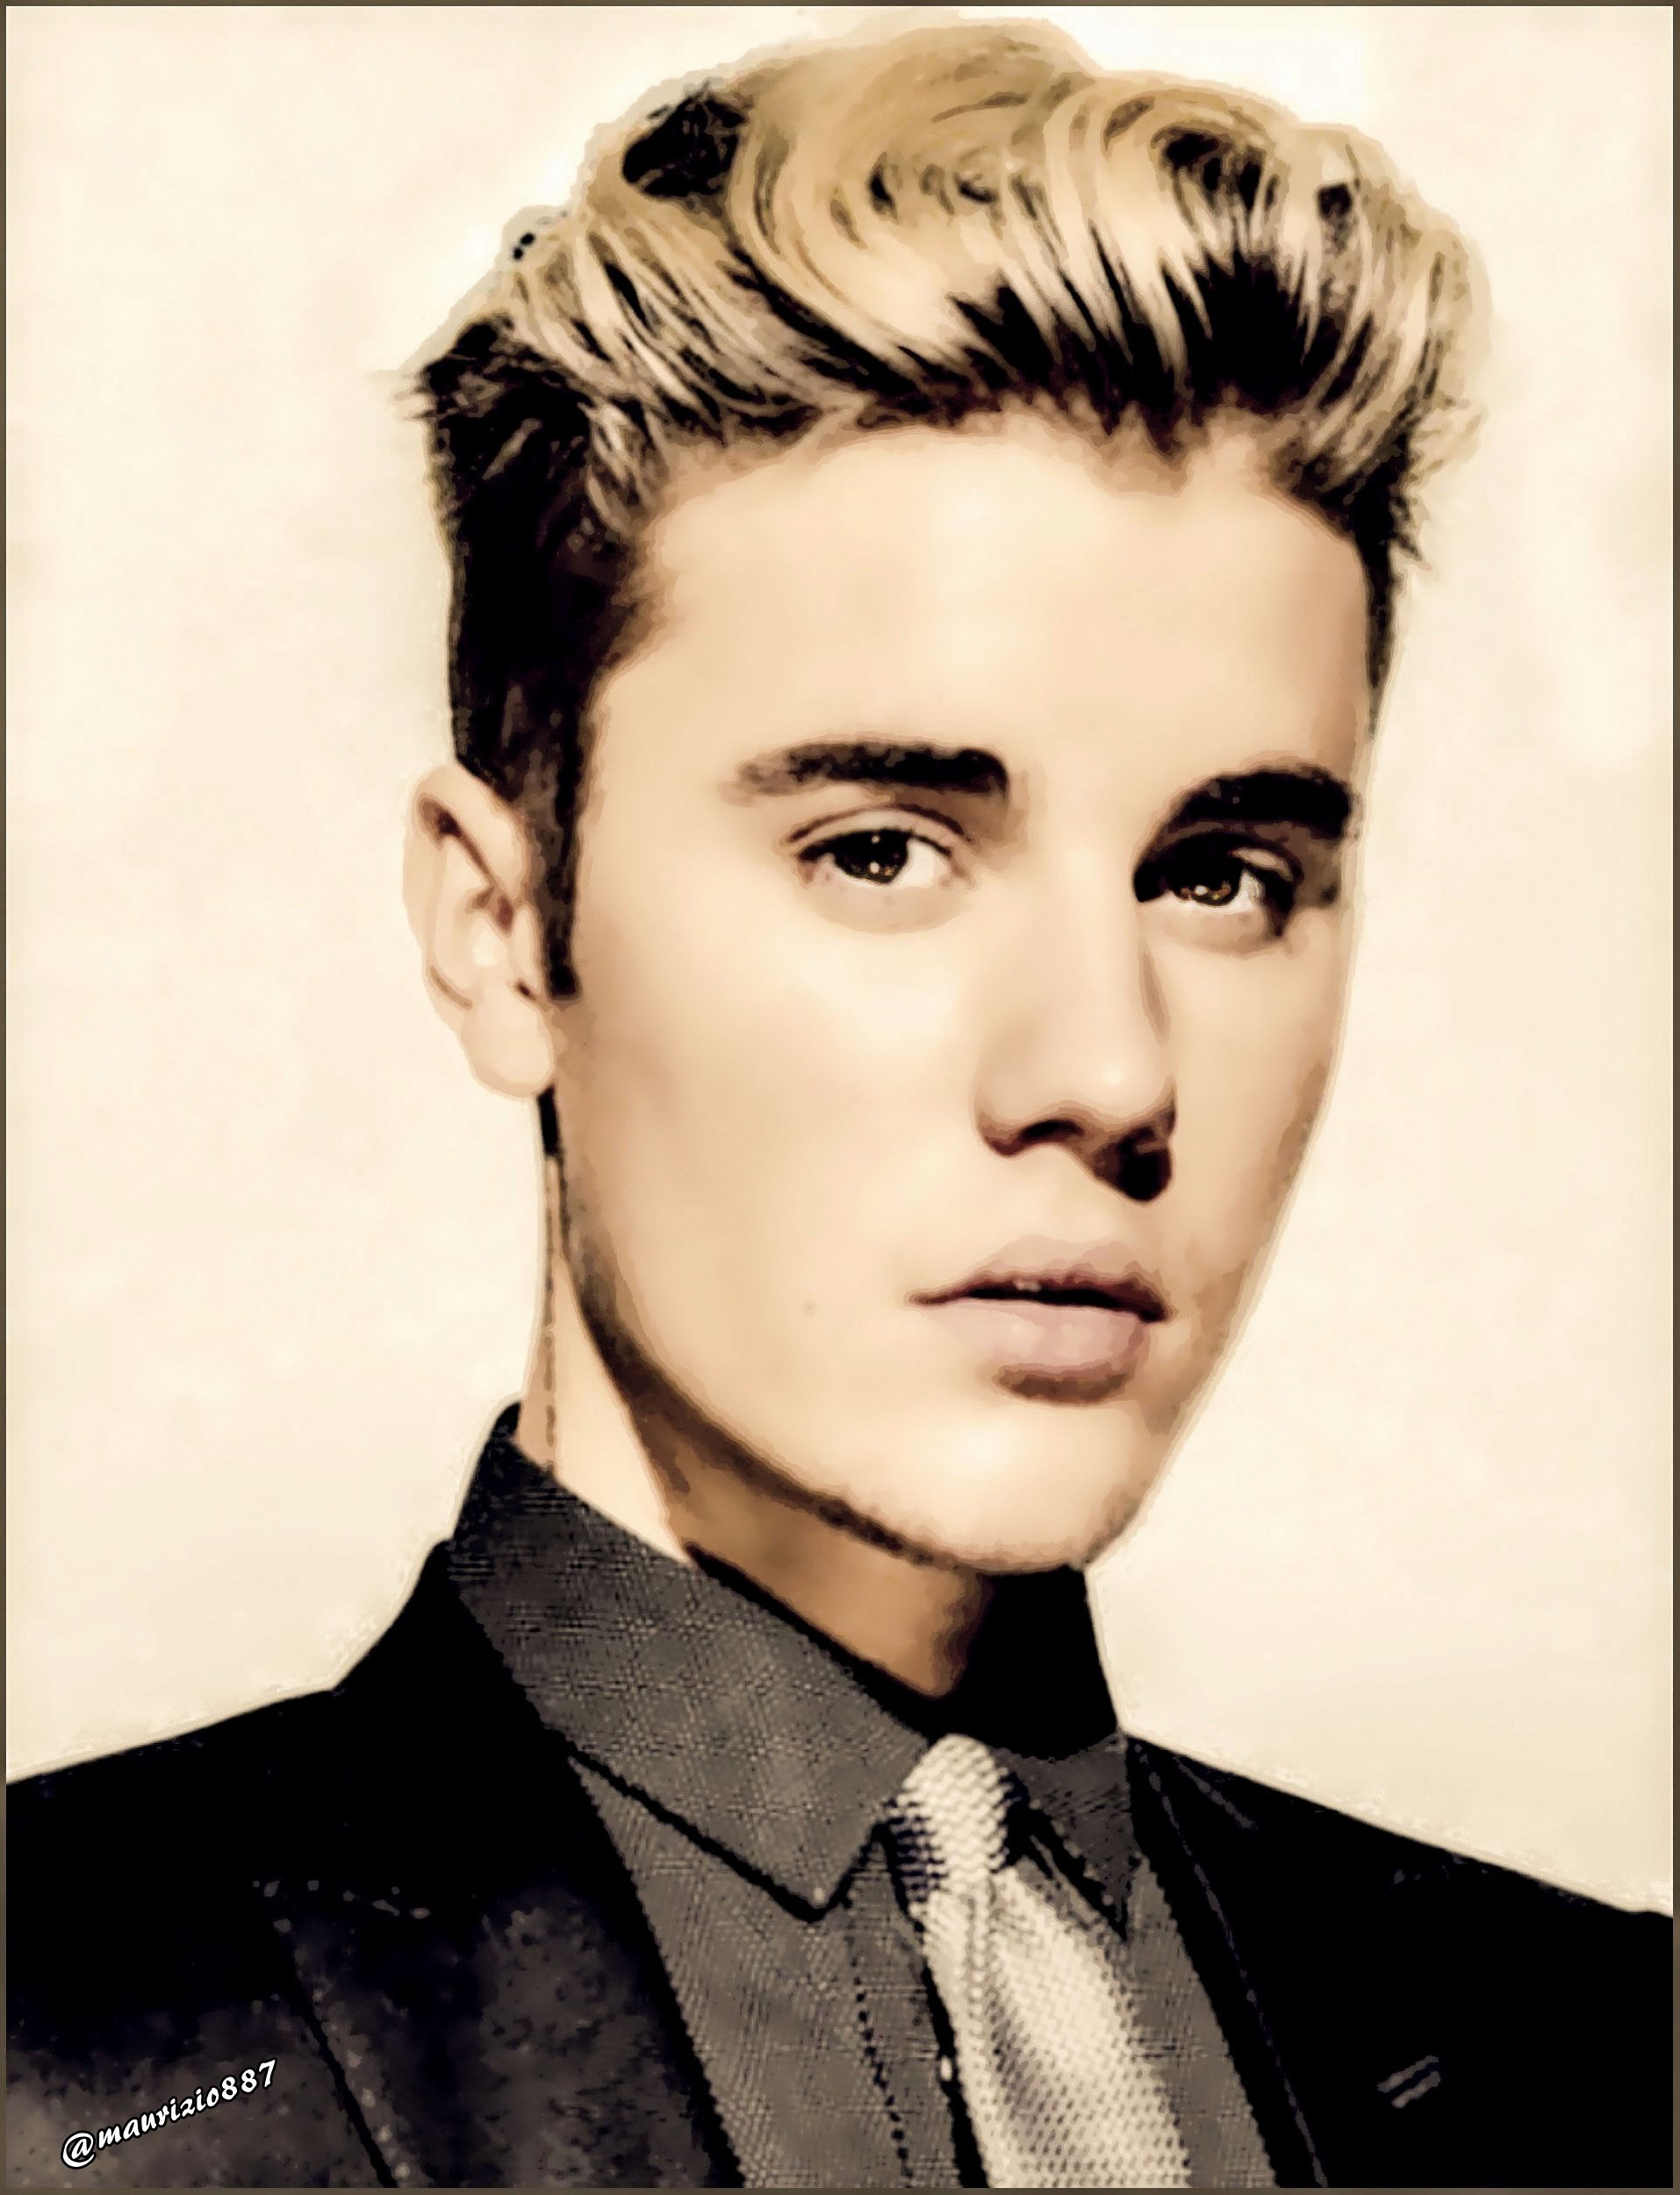 Justin Bieber images justin bieber 2016 HD wallpaper and